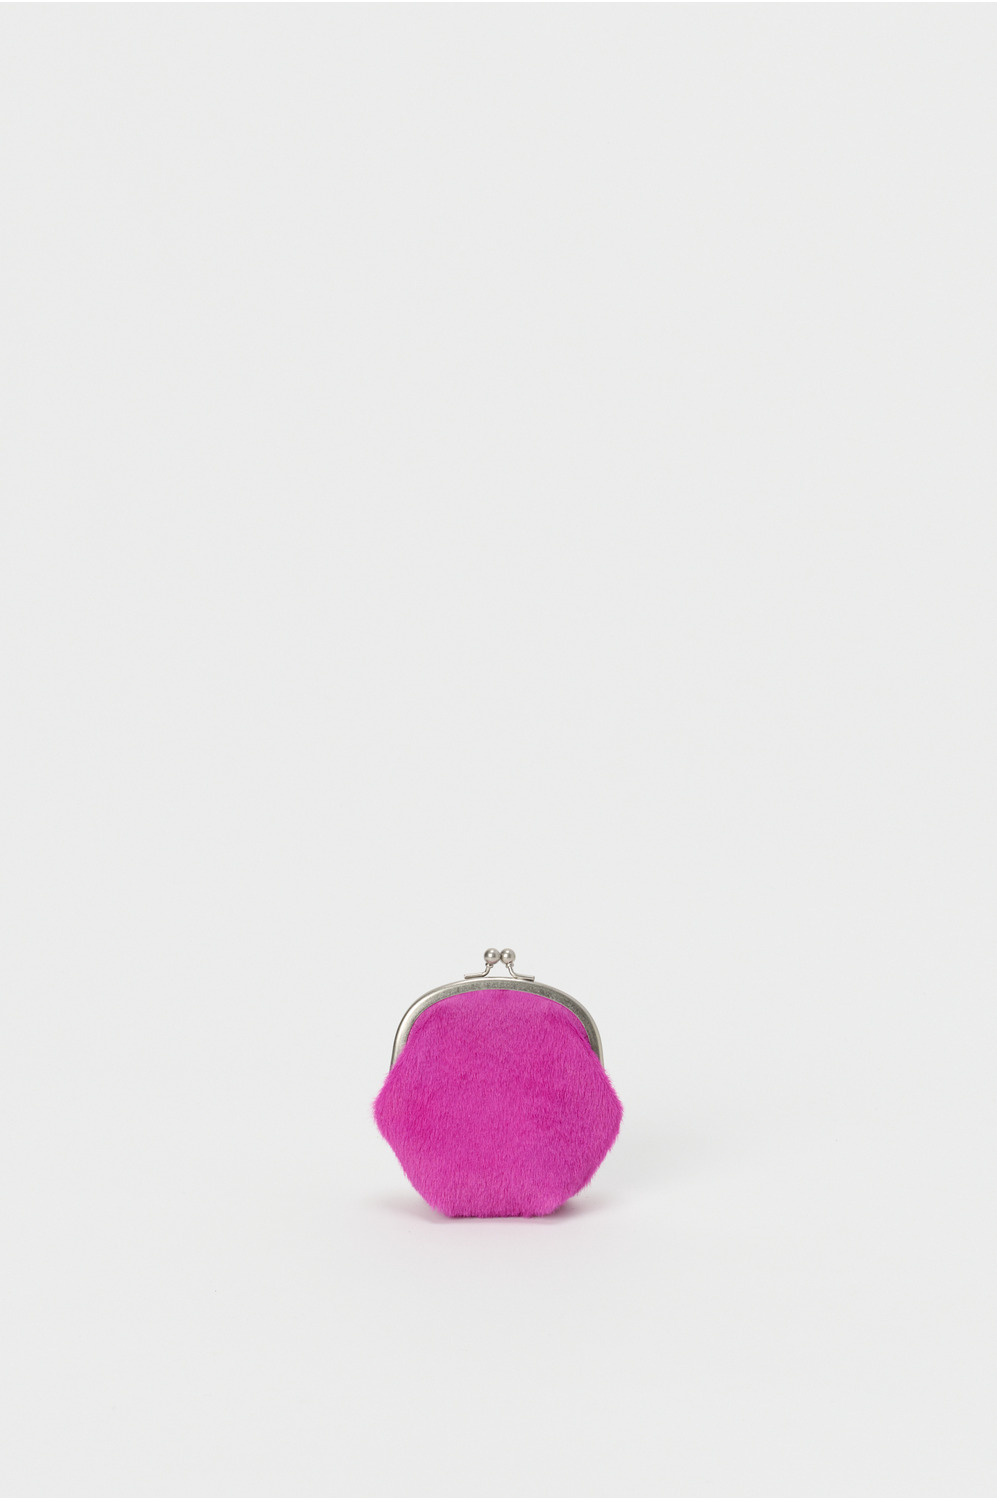 hairy snap pouch 詳細画像 pink purple 1